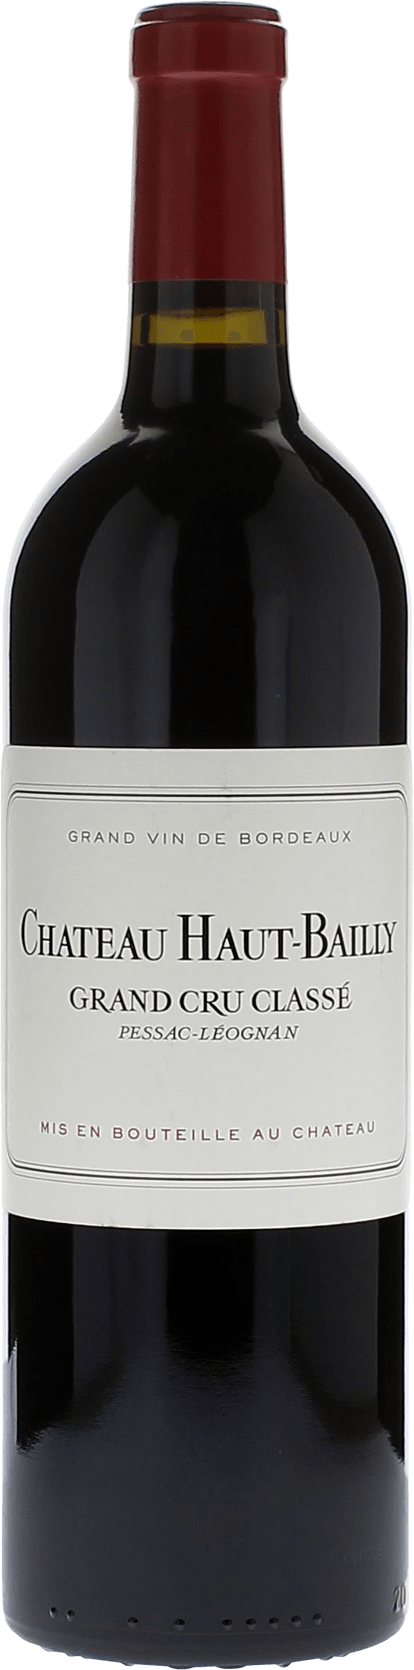 Haut bailly 2014 cru class Pessac-Lognan, Bordeaux rouge